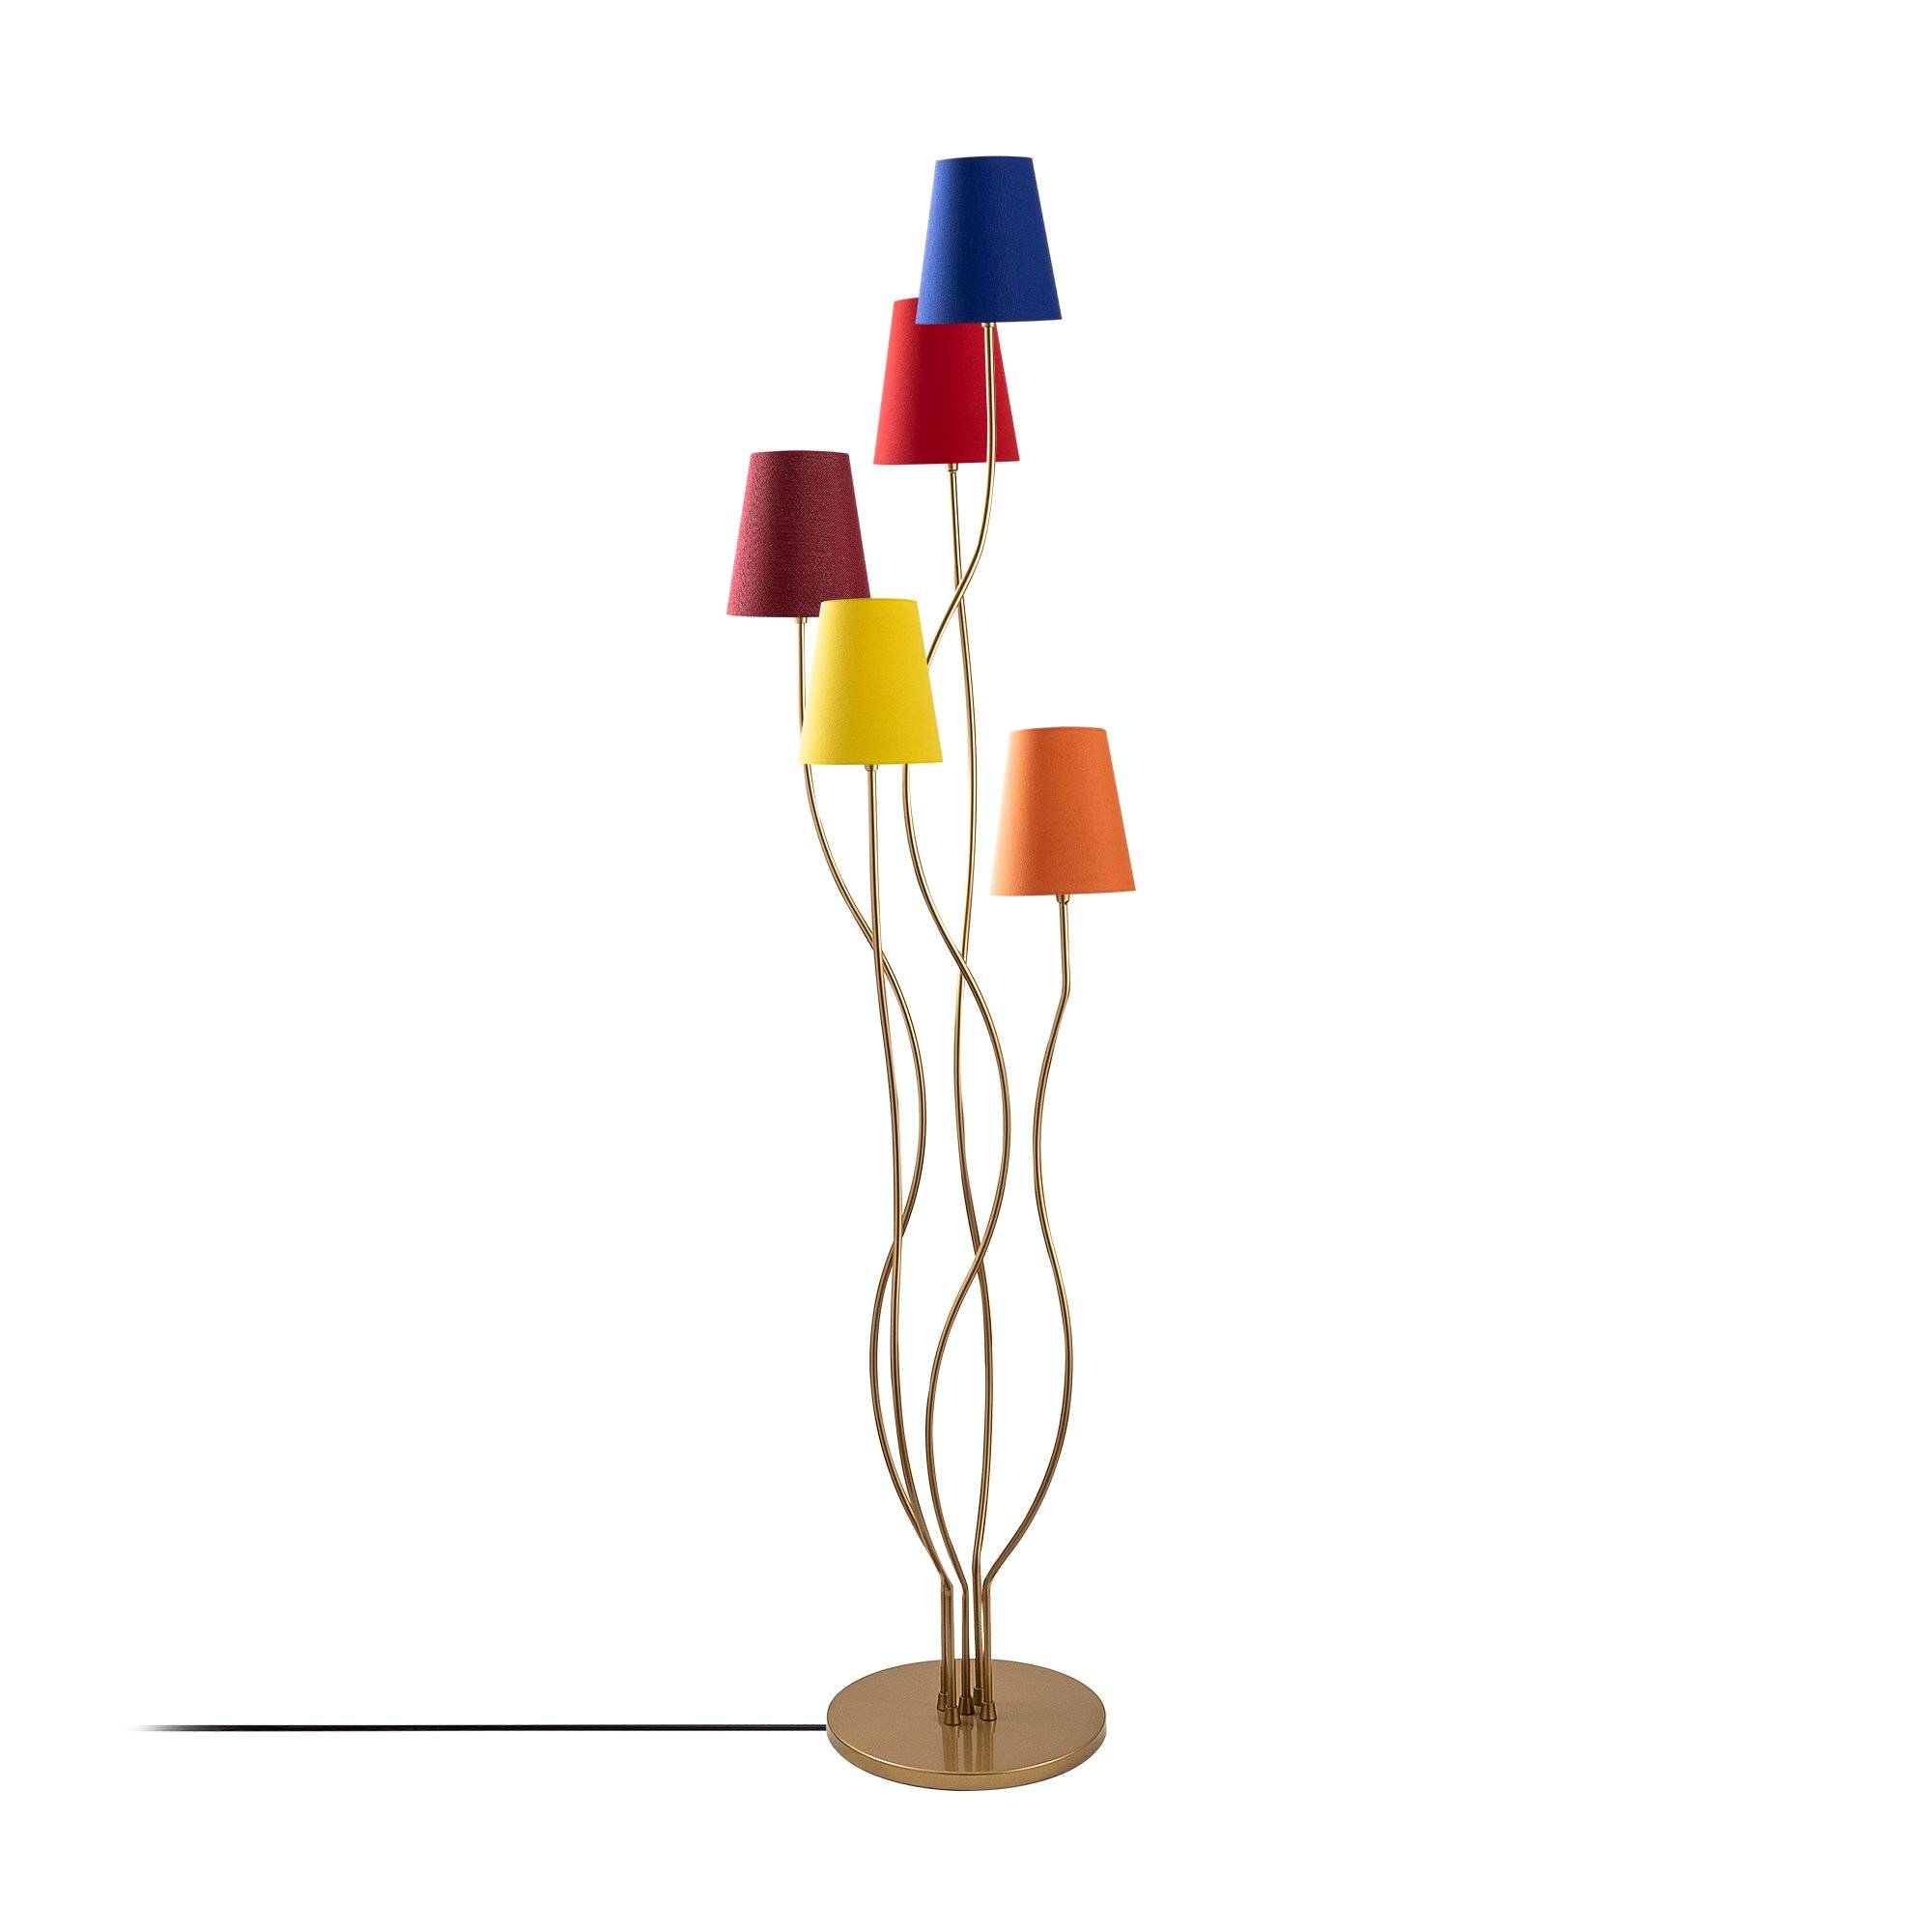 Lampadaire design 5 lampes Roselin H160cm Métal Or et Tissu Bleu, Rouge, Jaune et Orange